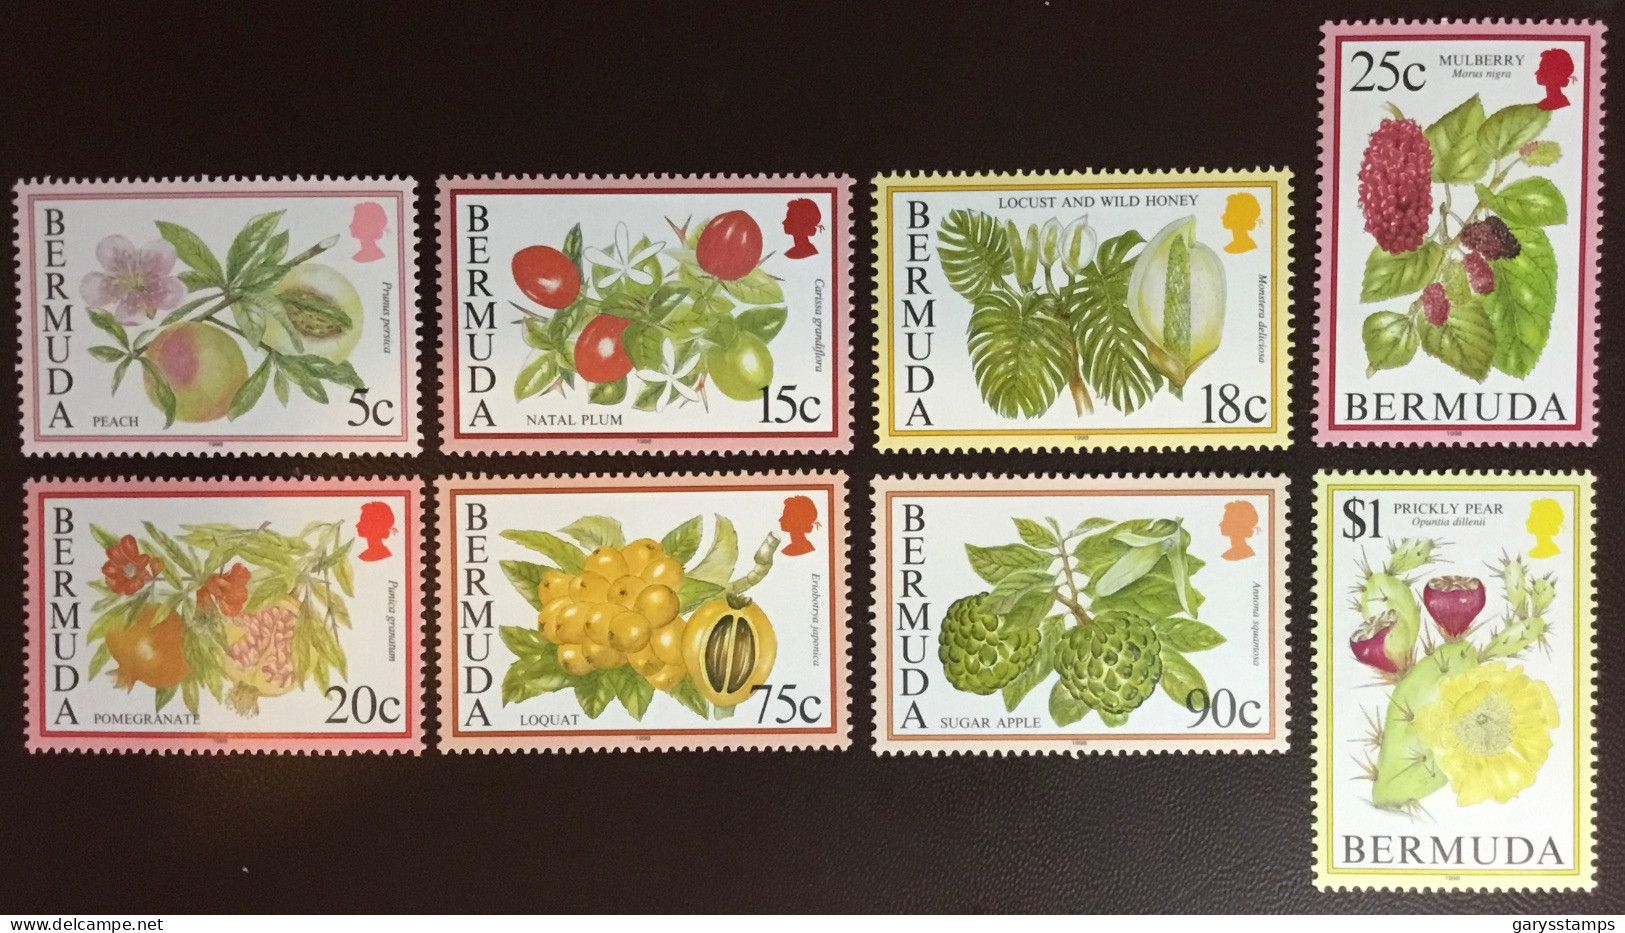 Bermuda 1998 Flowering Fruits Definitives Imprint Date Set MNH - Frutta